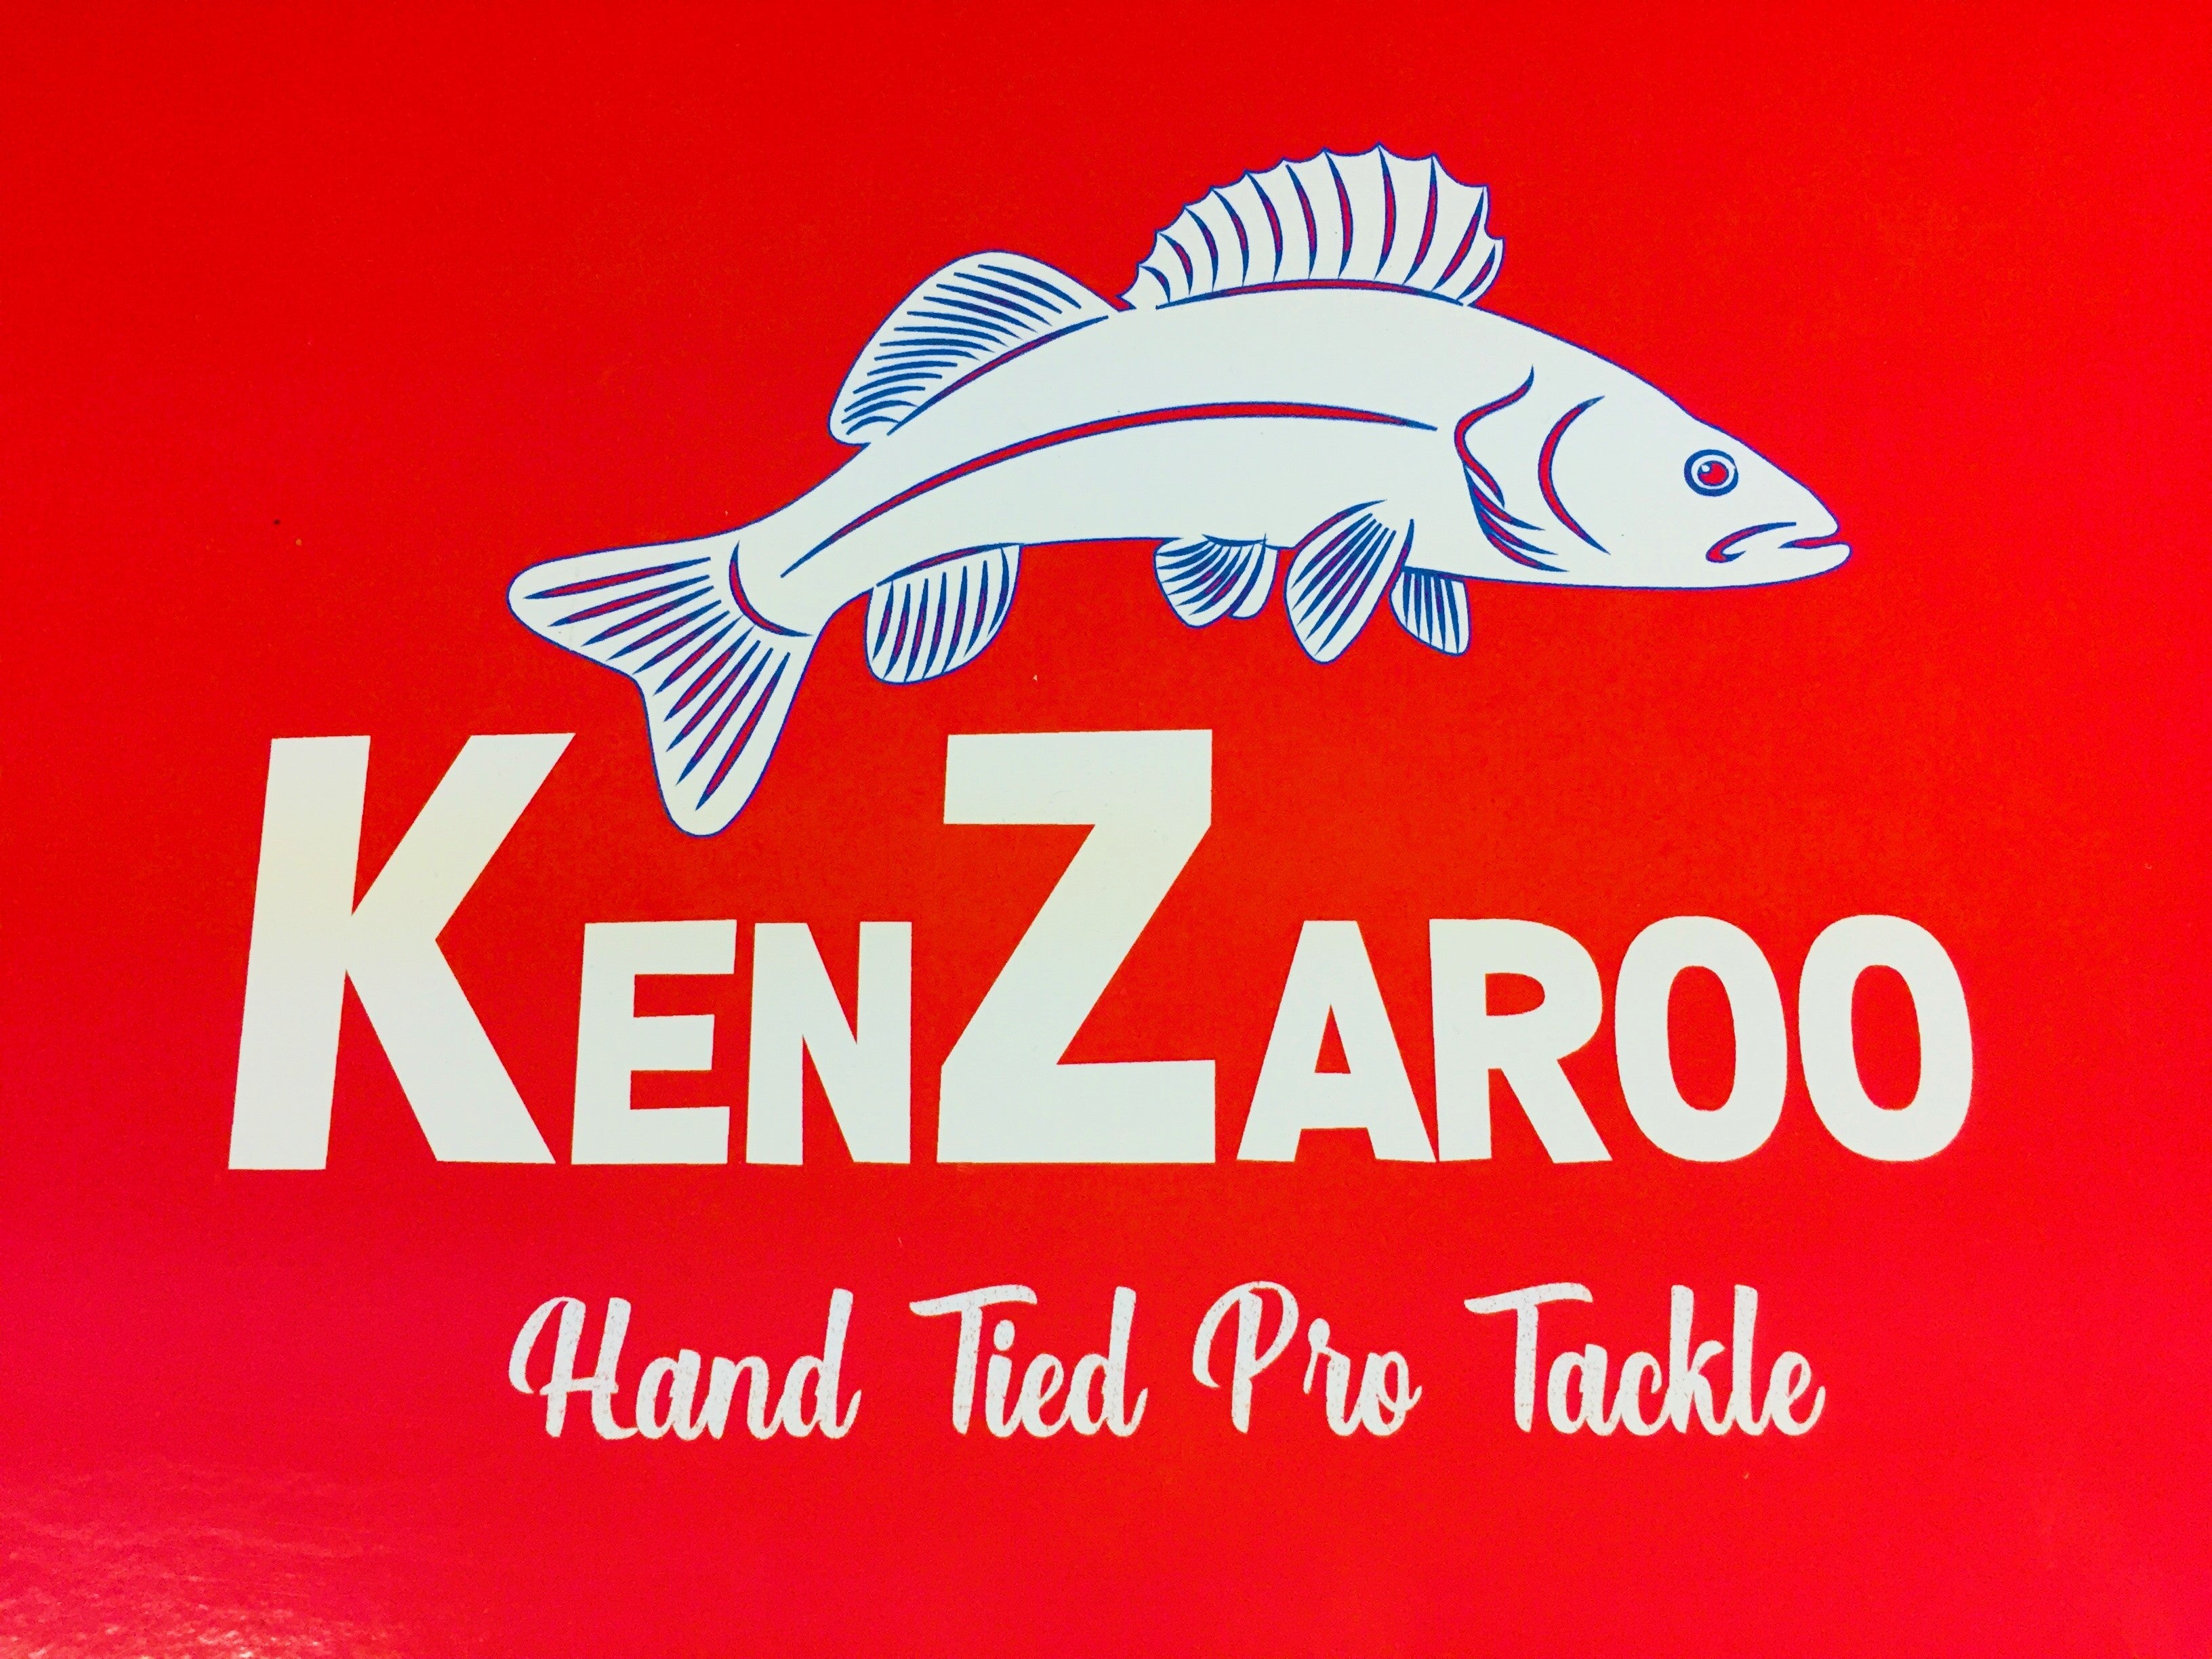 KenZaroo Pro Tackle- Hand Tied Pro Fishing Tackle